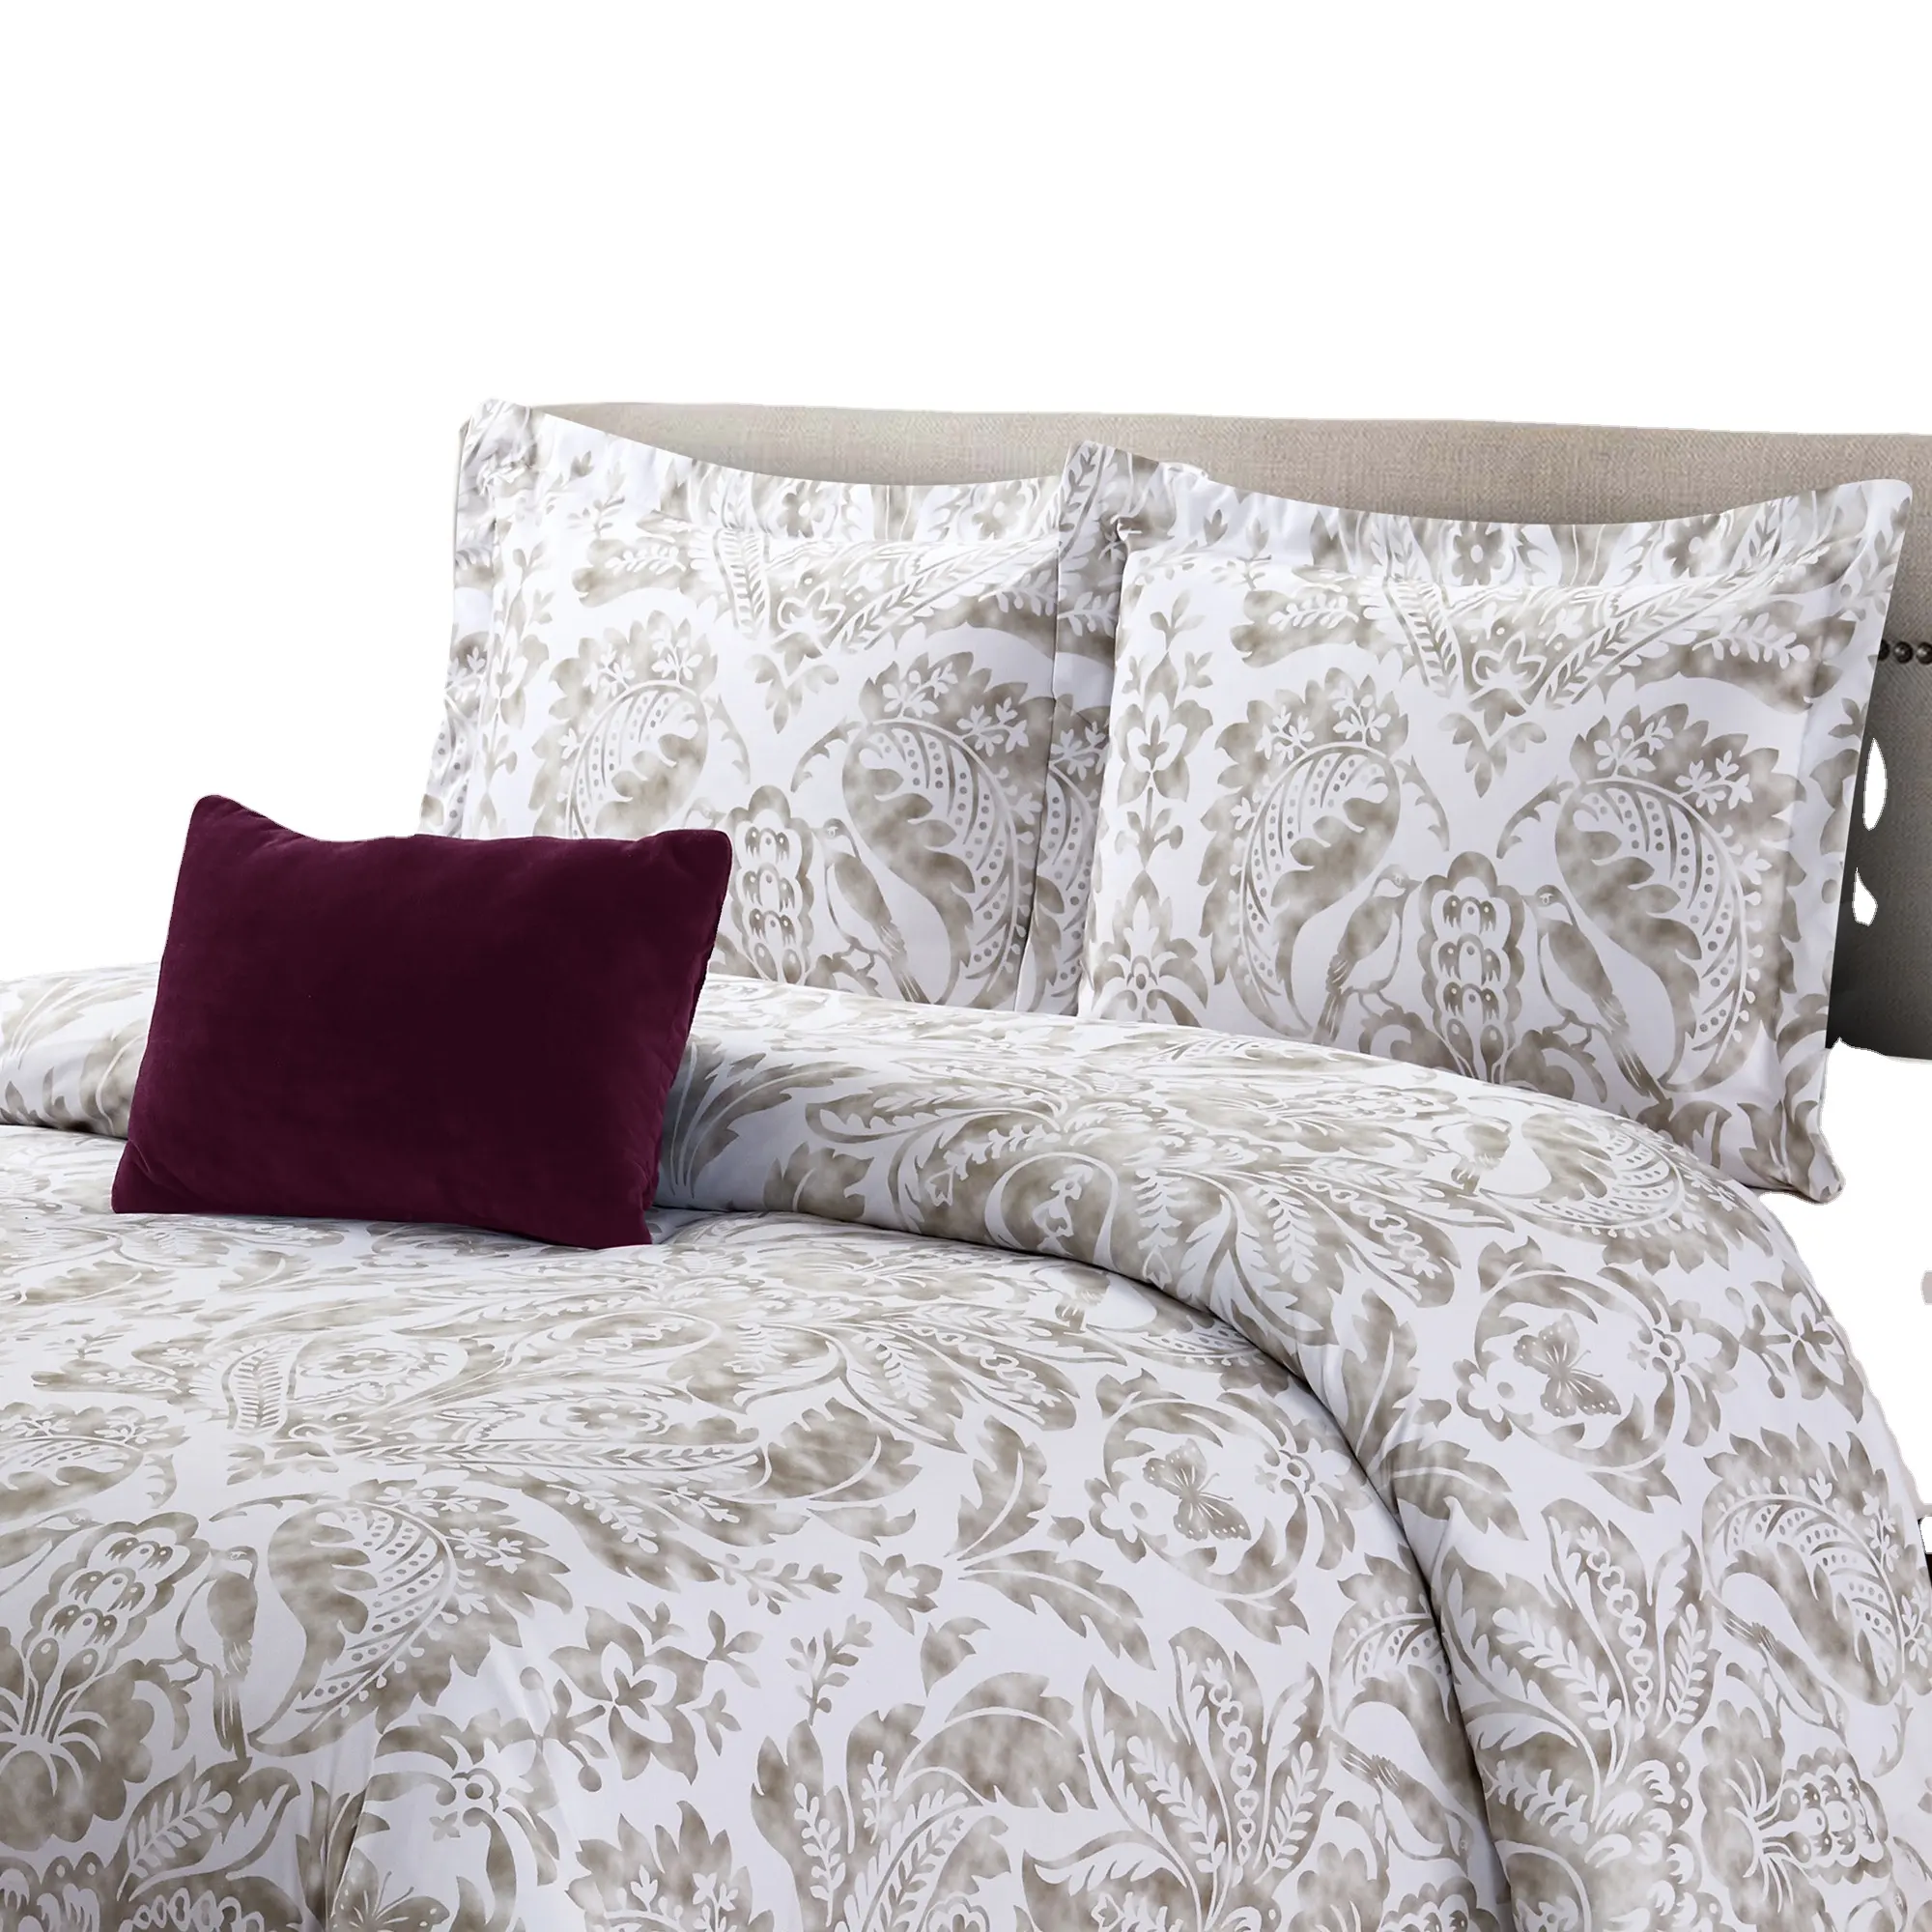 ALPHA TEXTILEデザイナークイーンサイズ寝具セットPiumini防水枕ケース羽毛布団カバーキルトセット